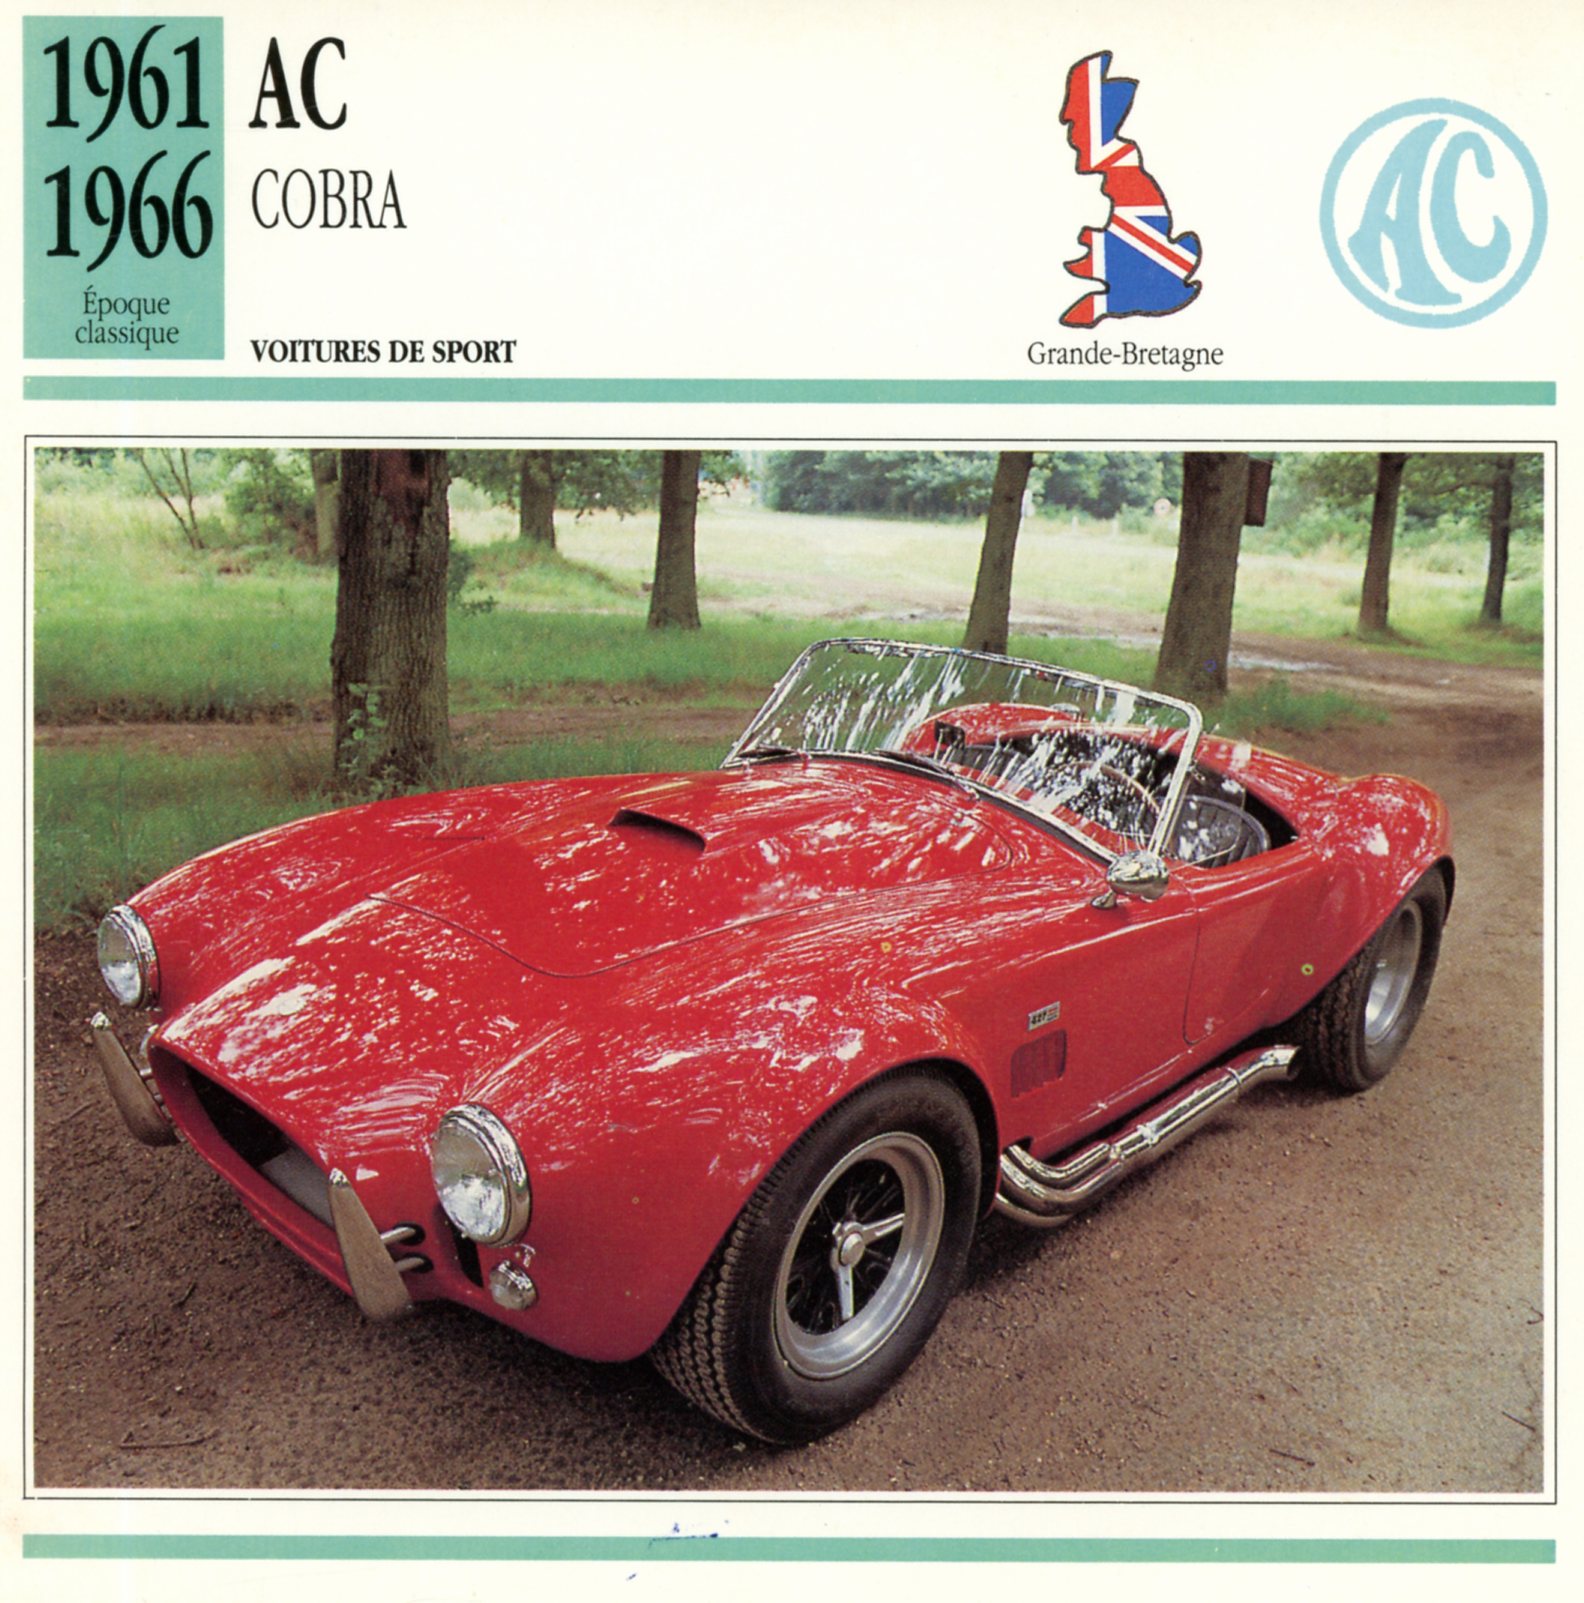 FICHE-AUTO-AC-COBRA-1961-1966-LEMASTERBROCKERS-CARS-CARD